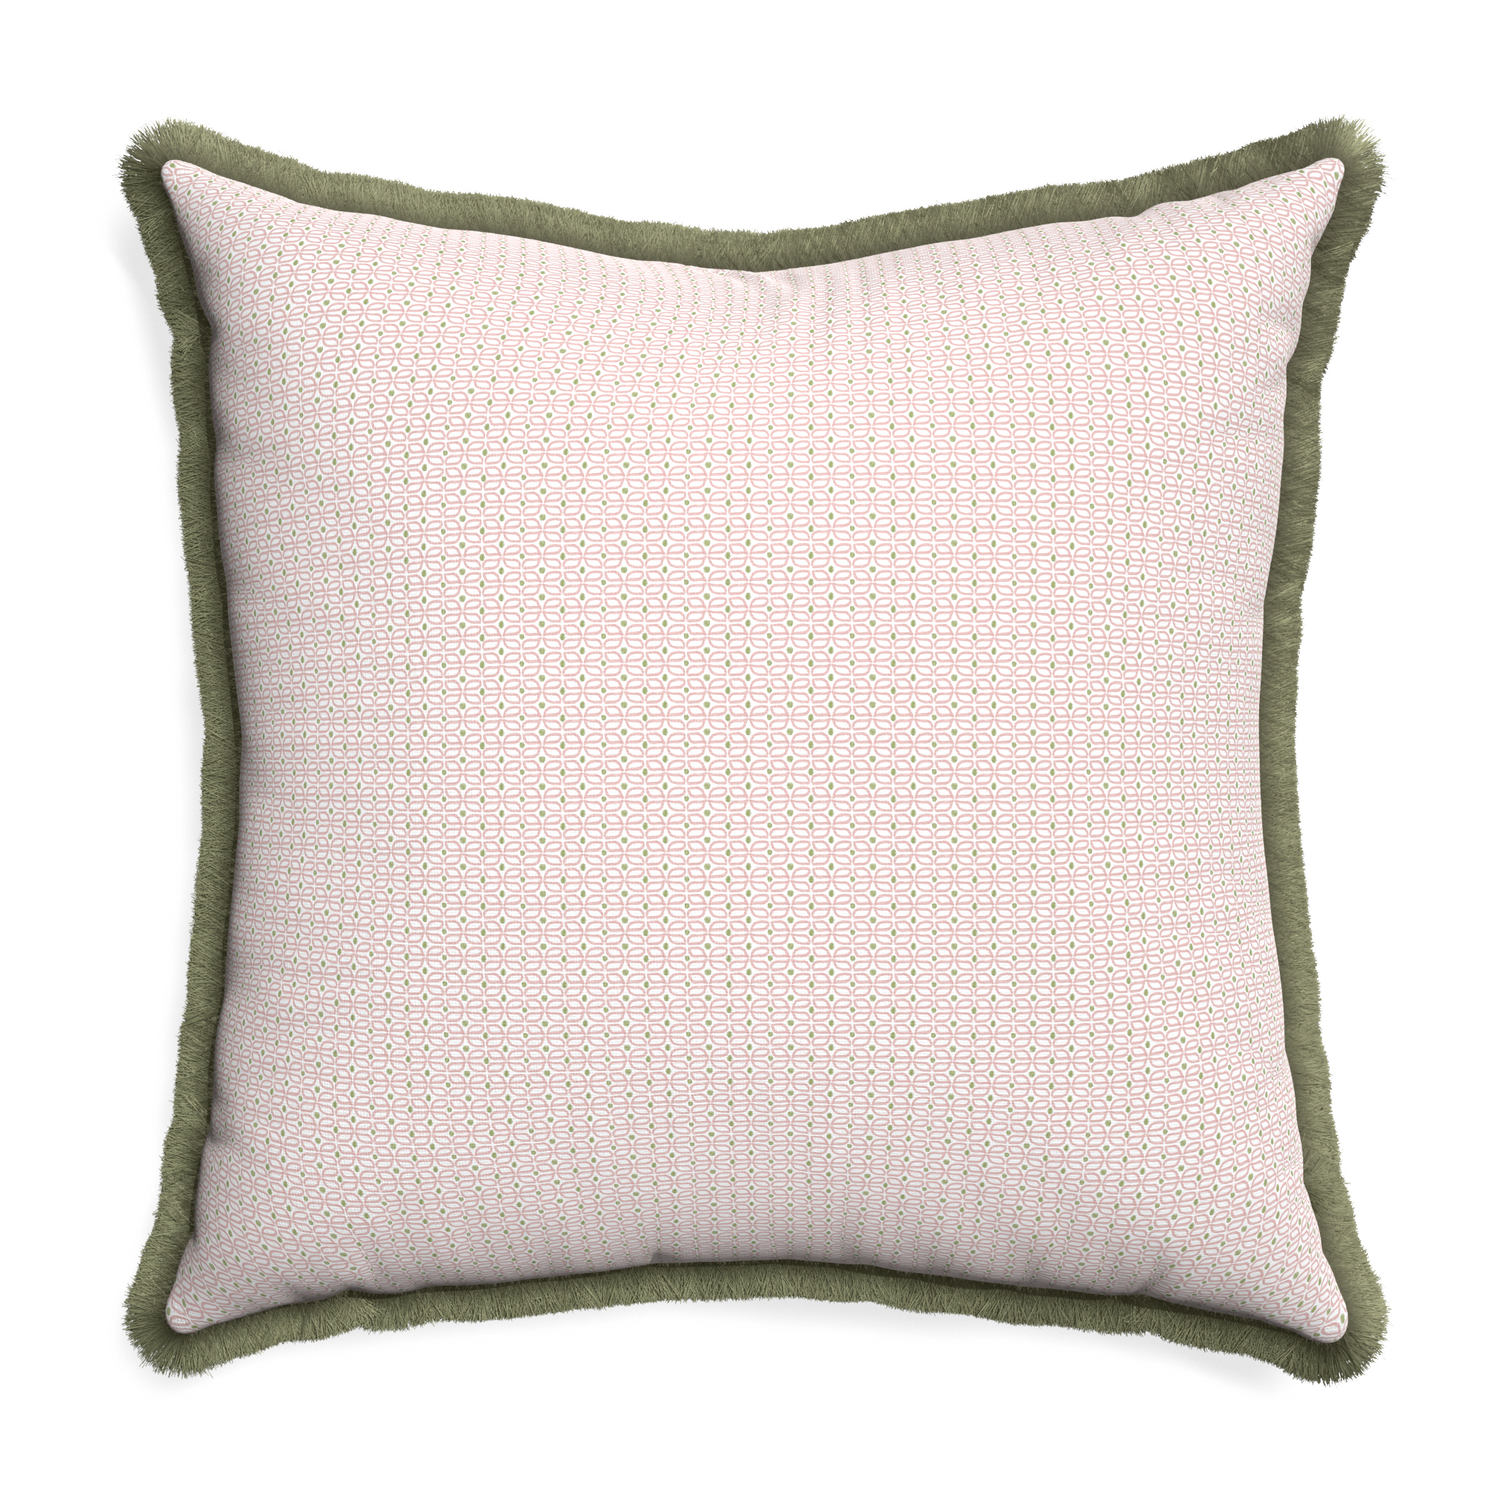 Euro-sham loomi pink custom pillow with sage fringe on white background